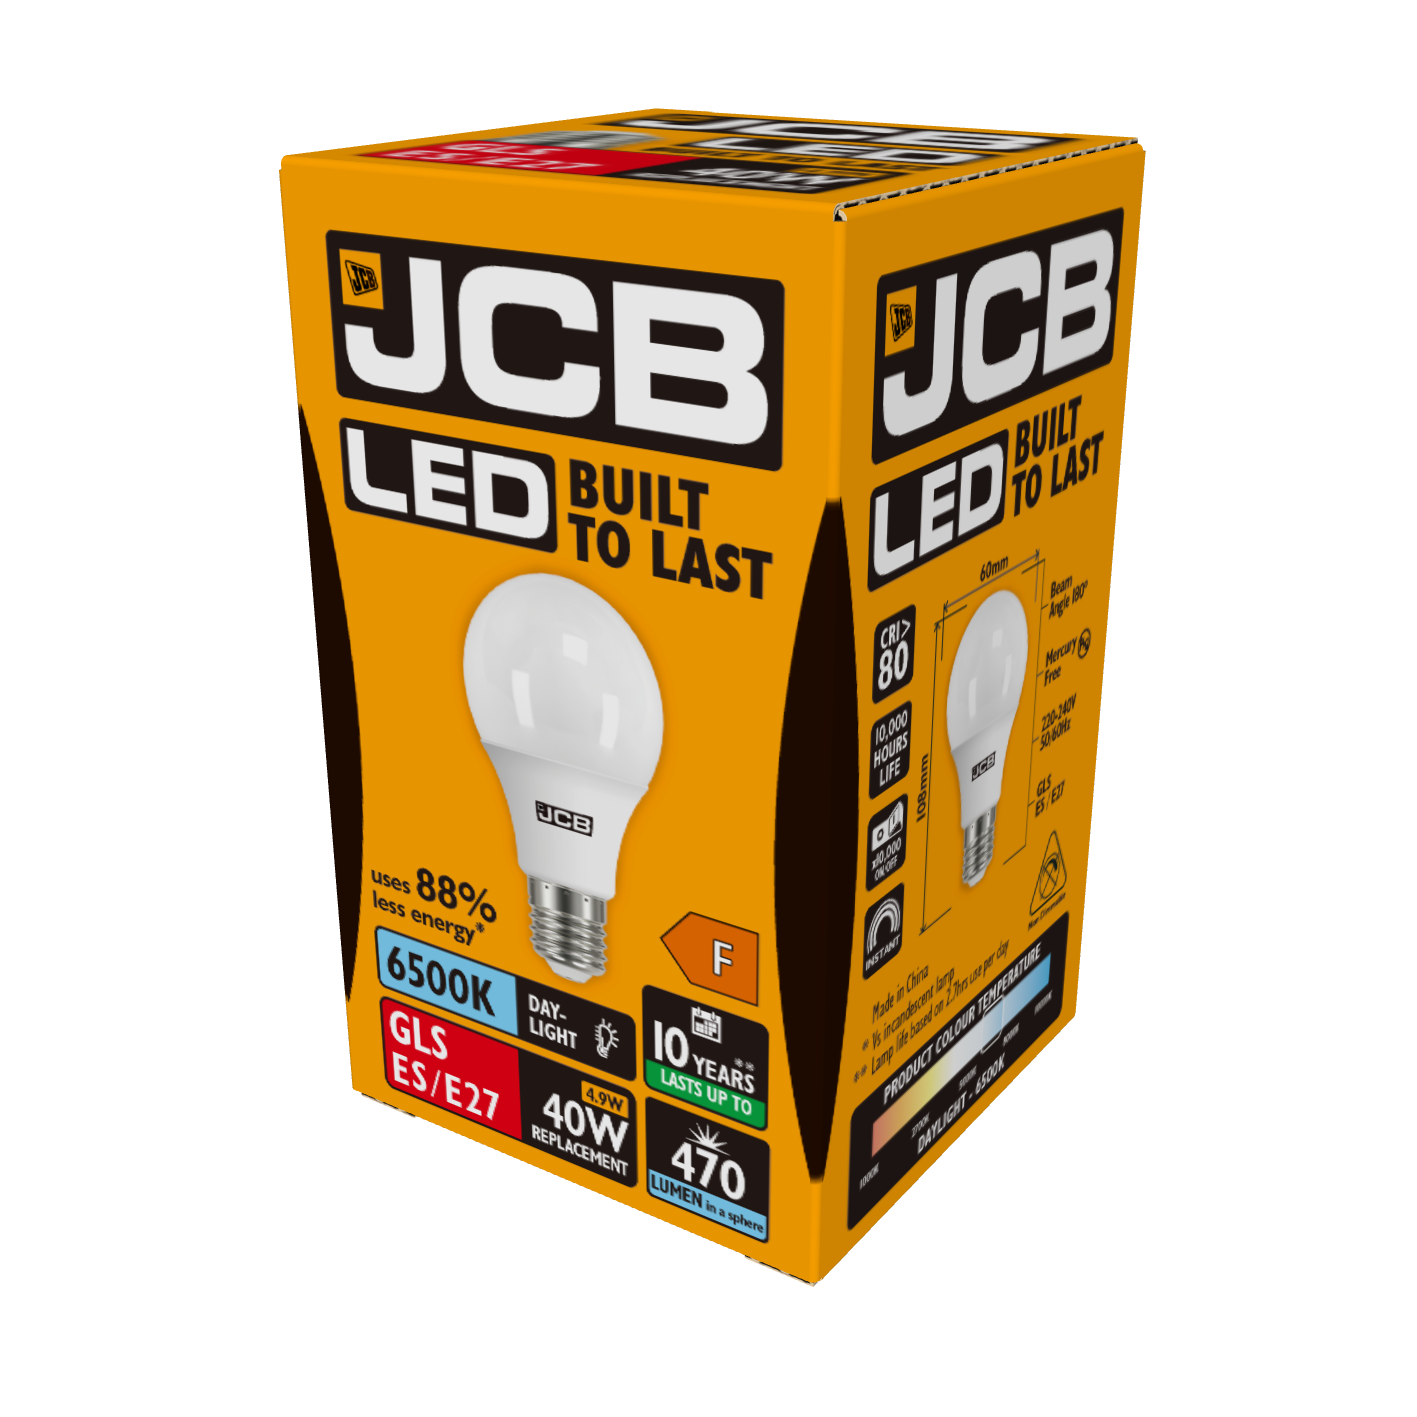 JCB LED GLS E27 (ES) 470lm 4.9W 6,500K (Daylight), Box of 1